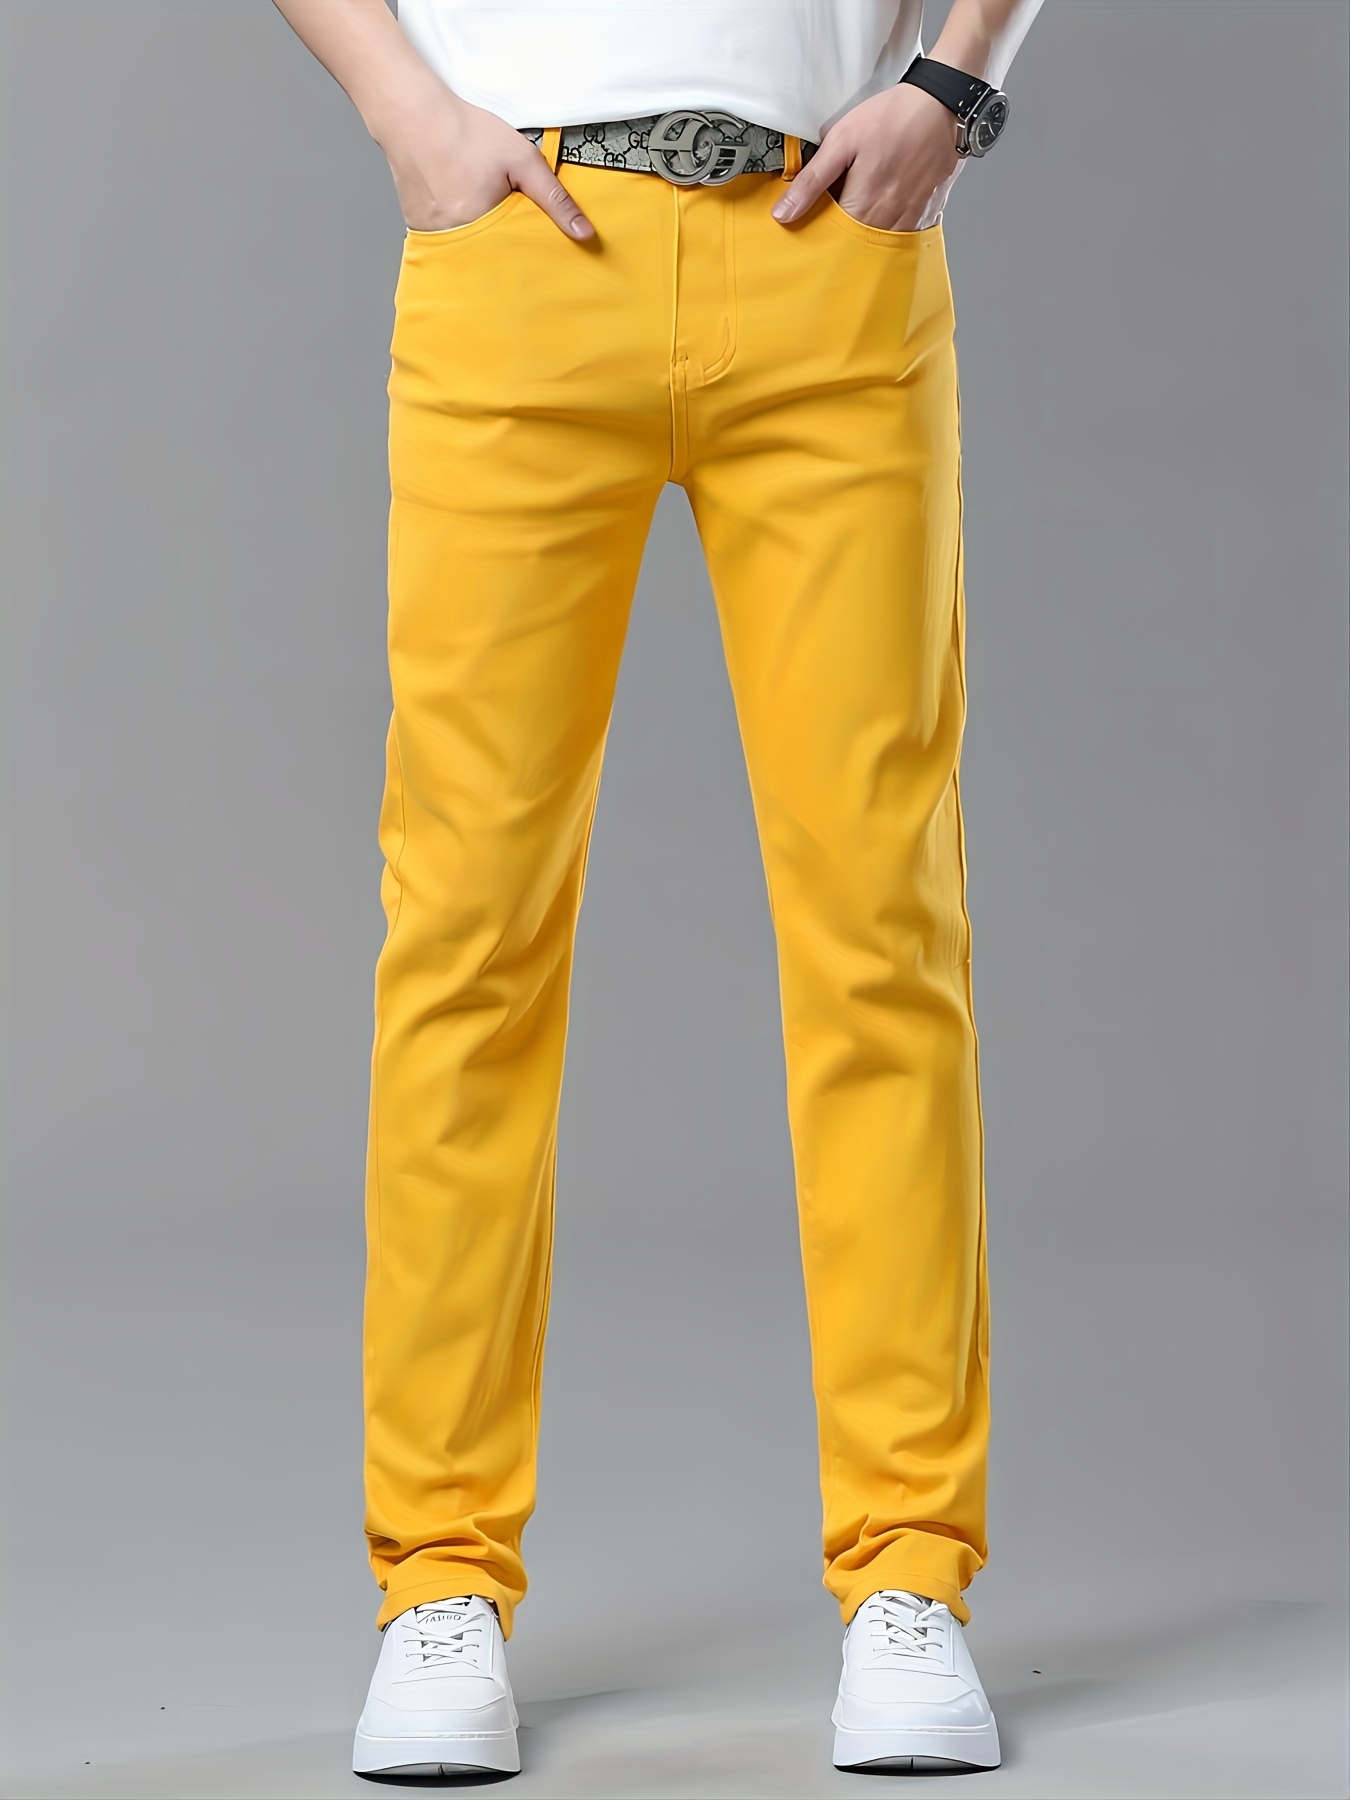 Men's Semi-formal Skinny Jeans, Chic Street Style Stretch Jeans